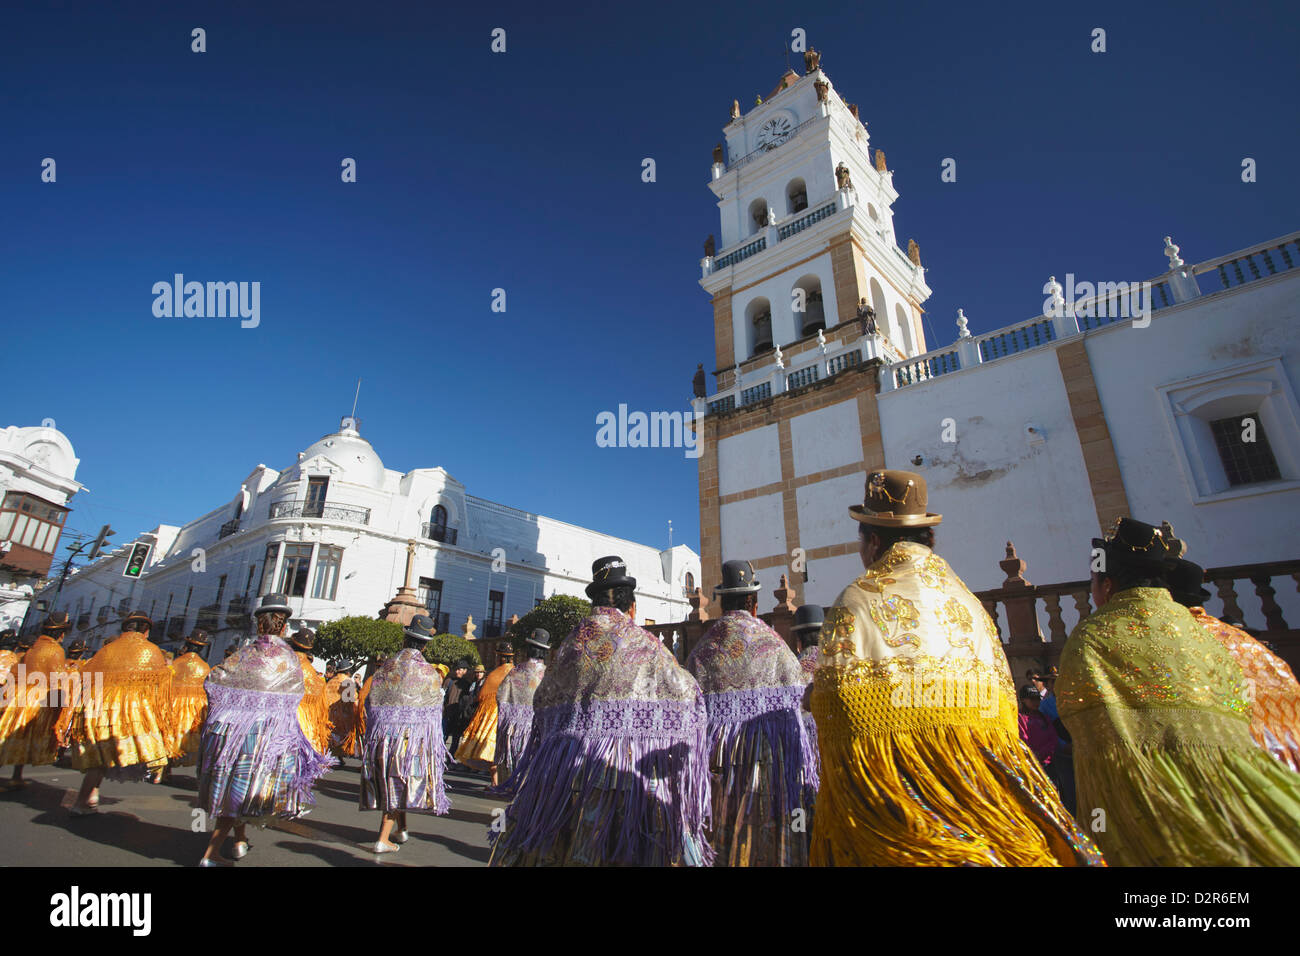 Women dancing in festival in Plaza 25 de Mayo, Sucre, UNESCO World Heritage Site, Bolivia, South America Stock Photo